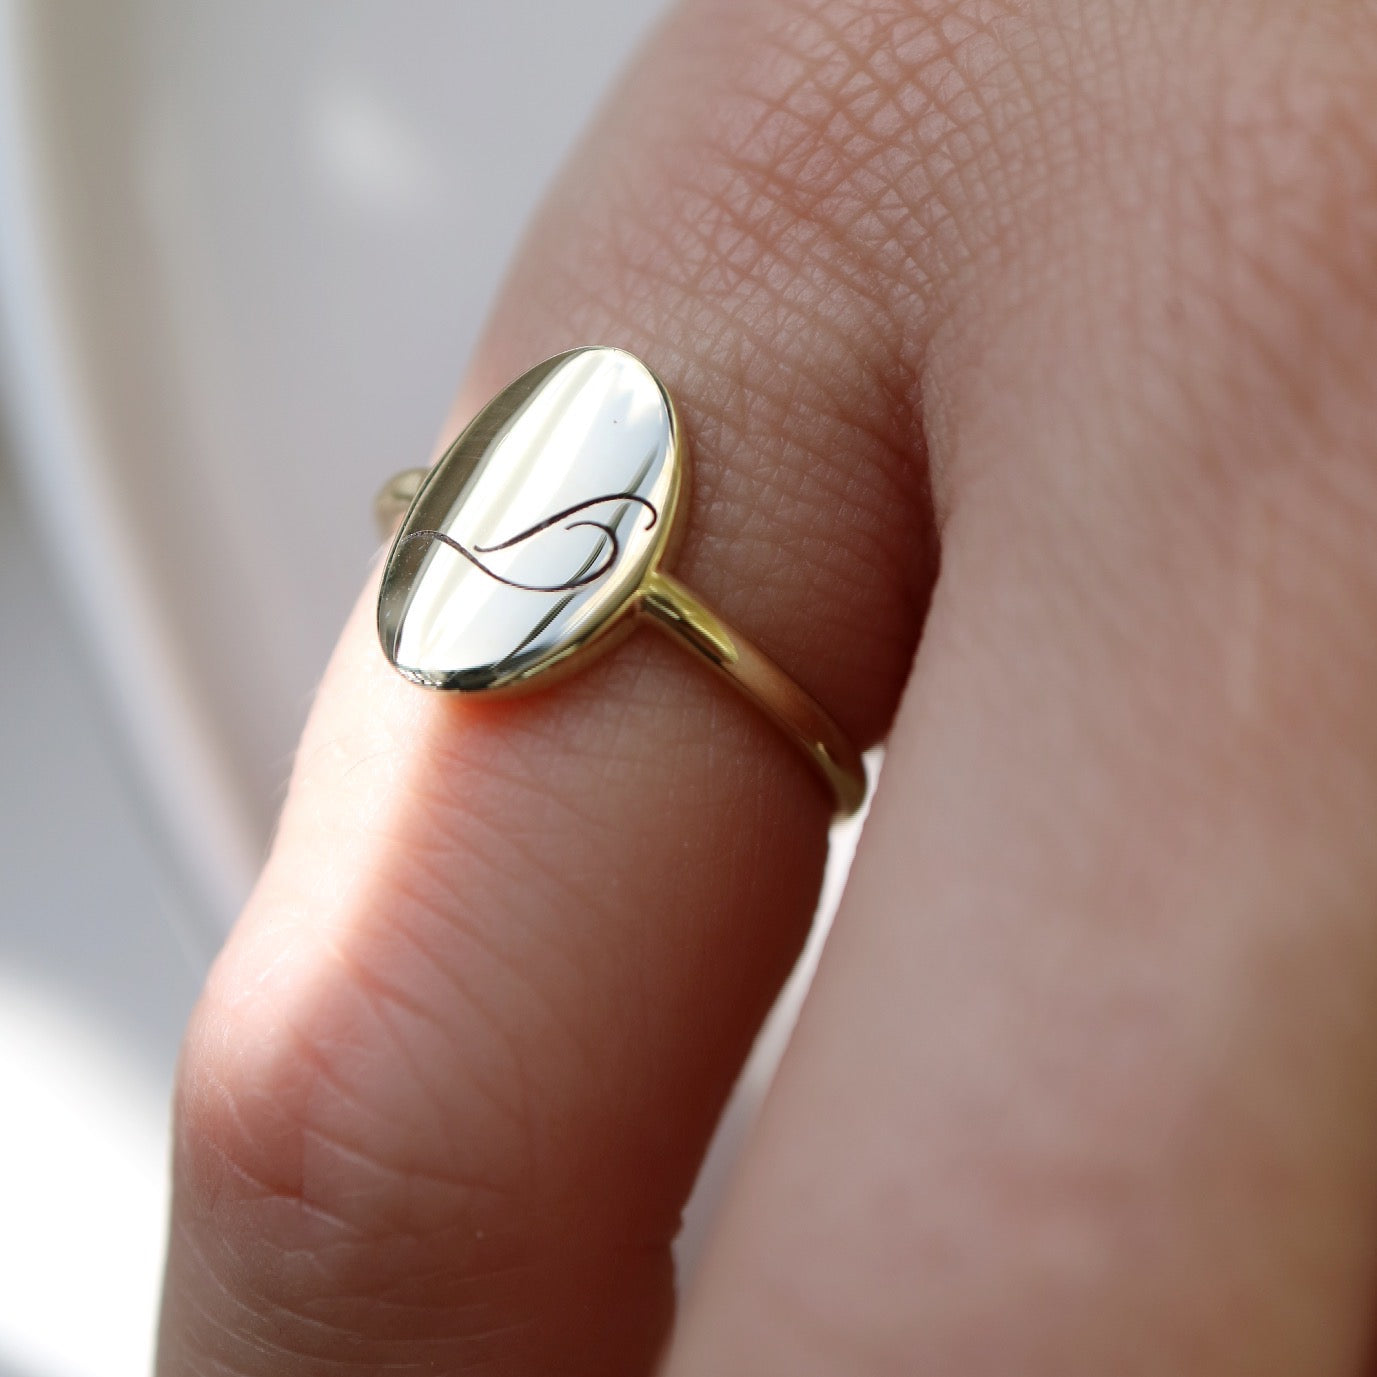 9kt gold Initial Signet Pinkie ring by Meraki Jewellery